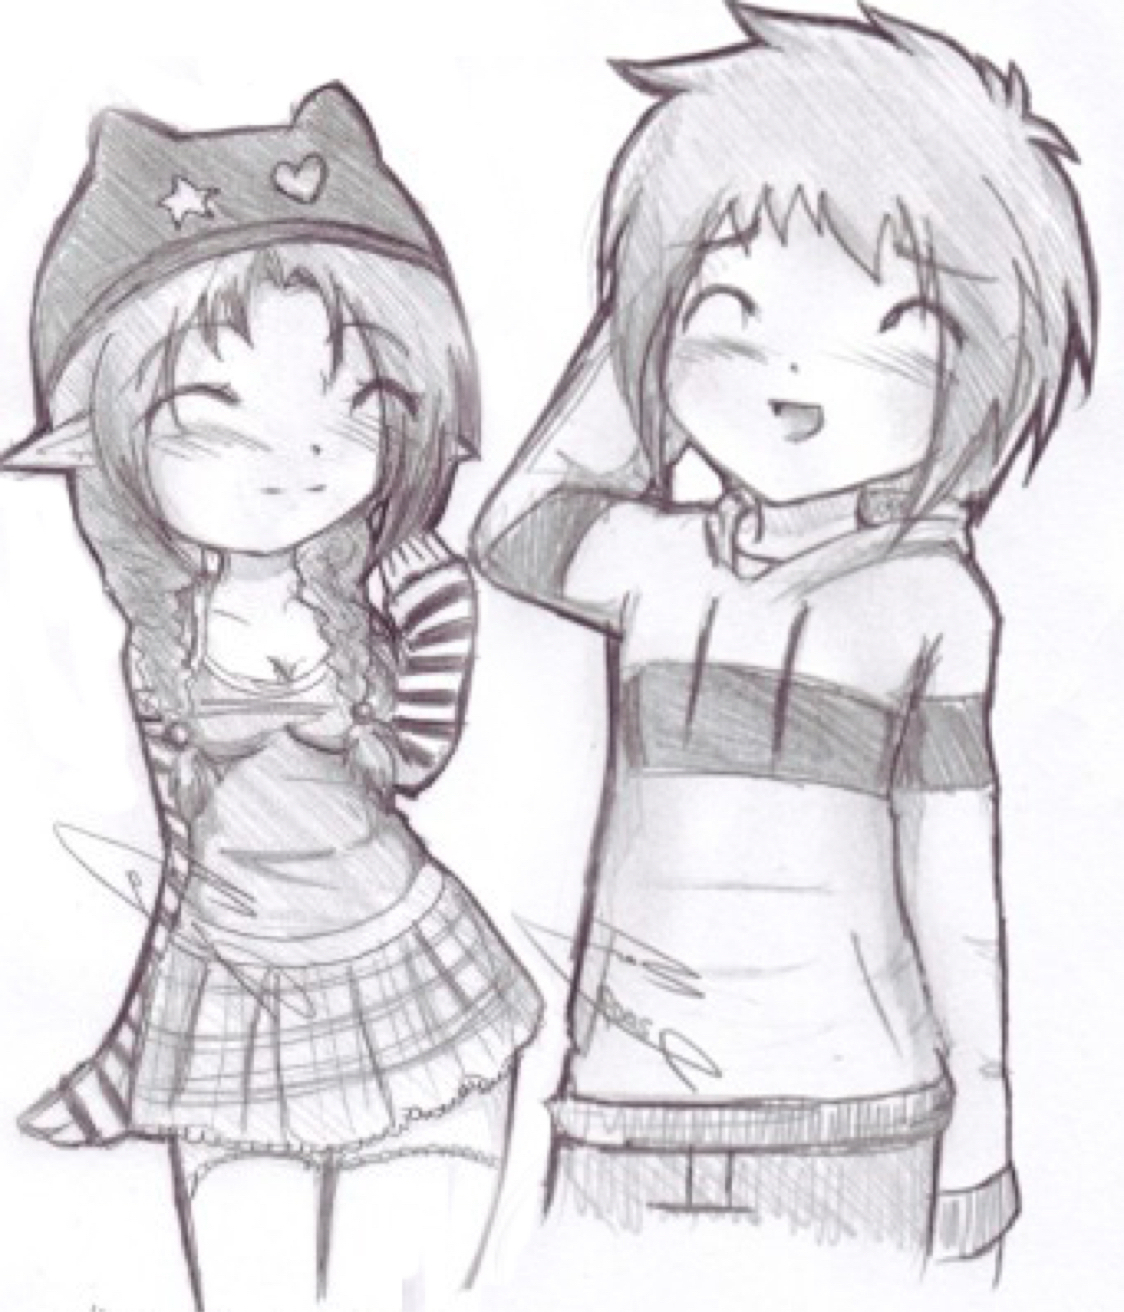 cute friendship pencil sketch